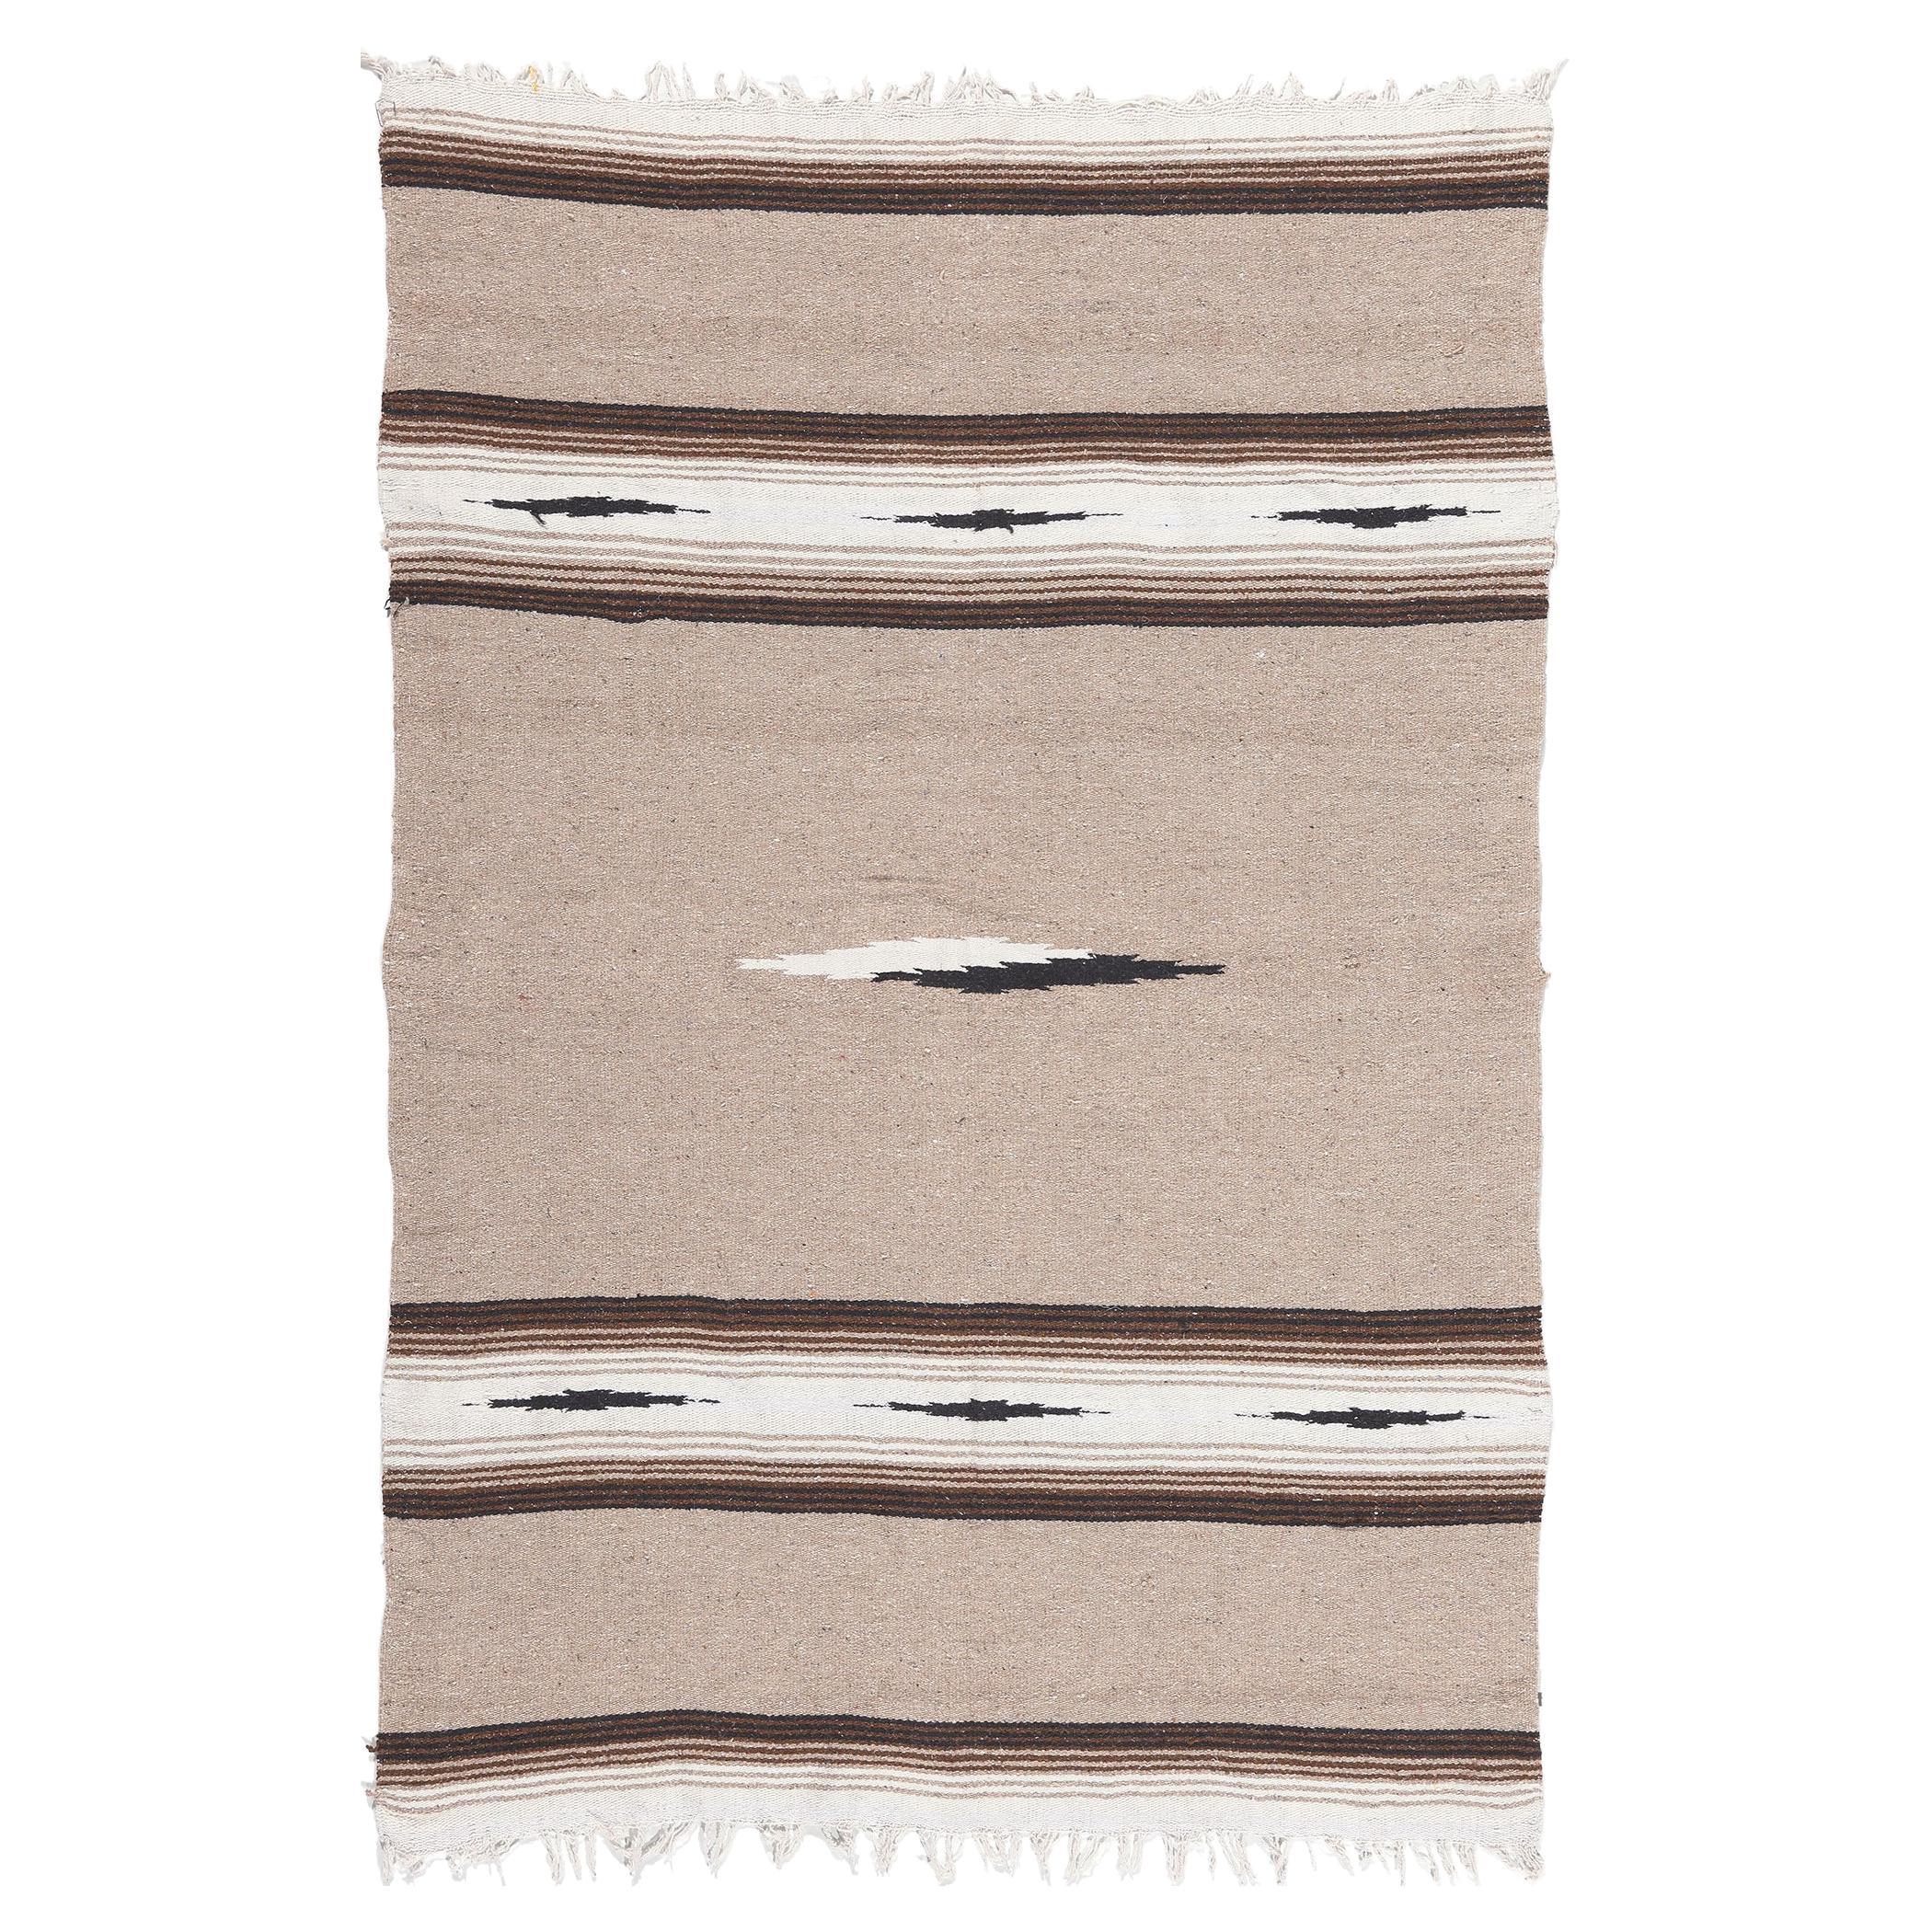 Vintage Mexican Serape Blanket Kilim Rug with Subtle Southwest Style